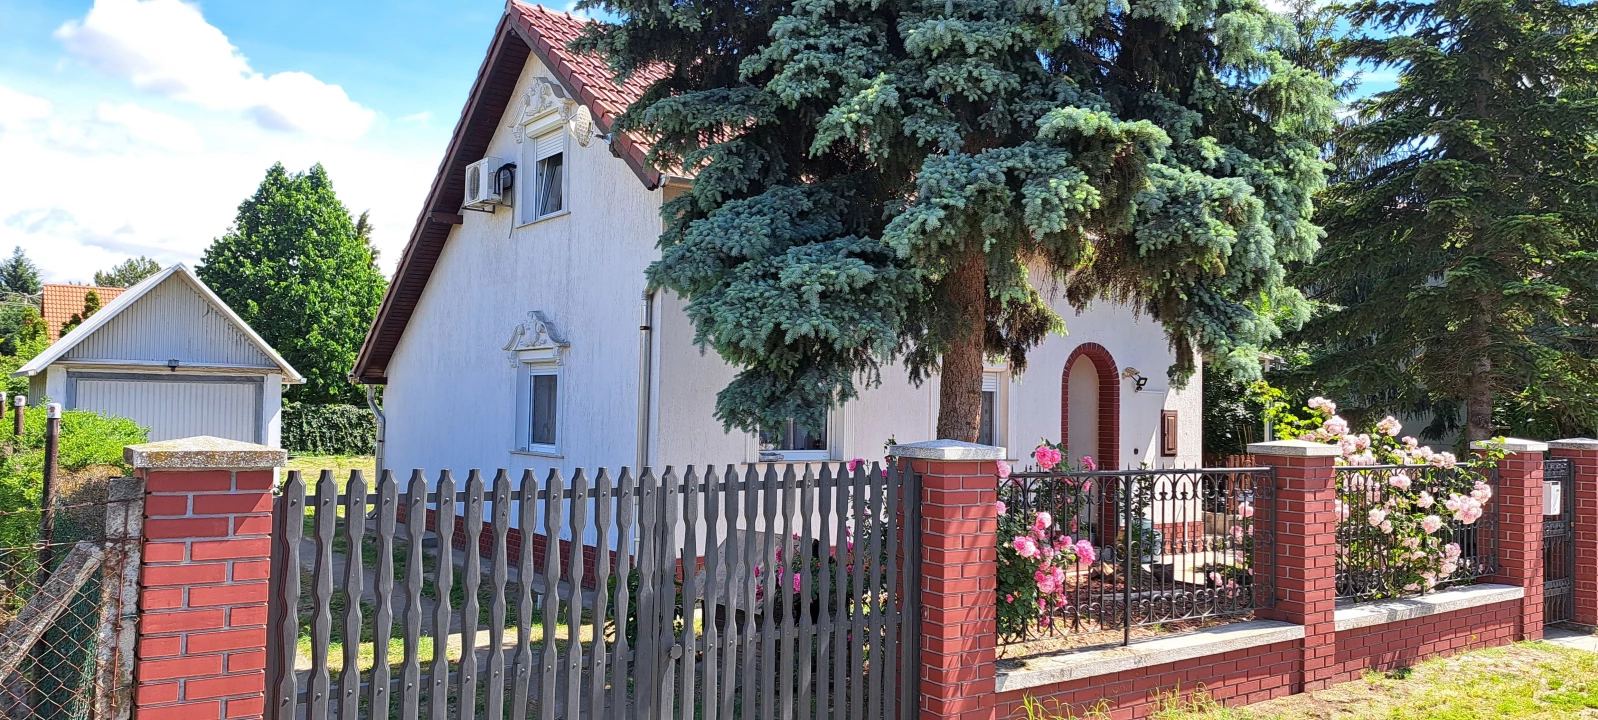 For sale house, Szeged, Sziksós